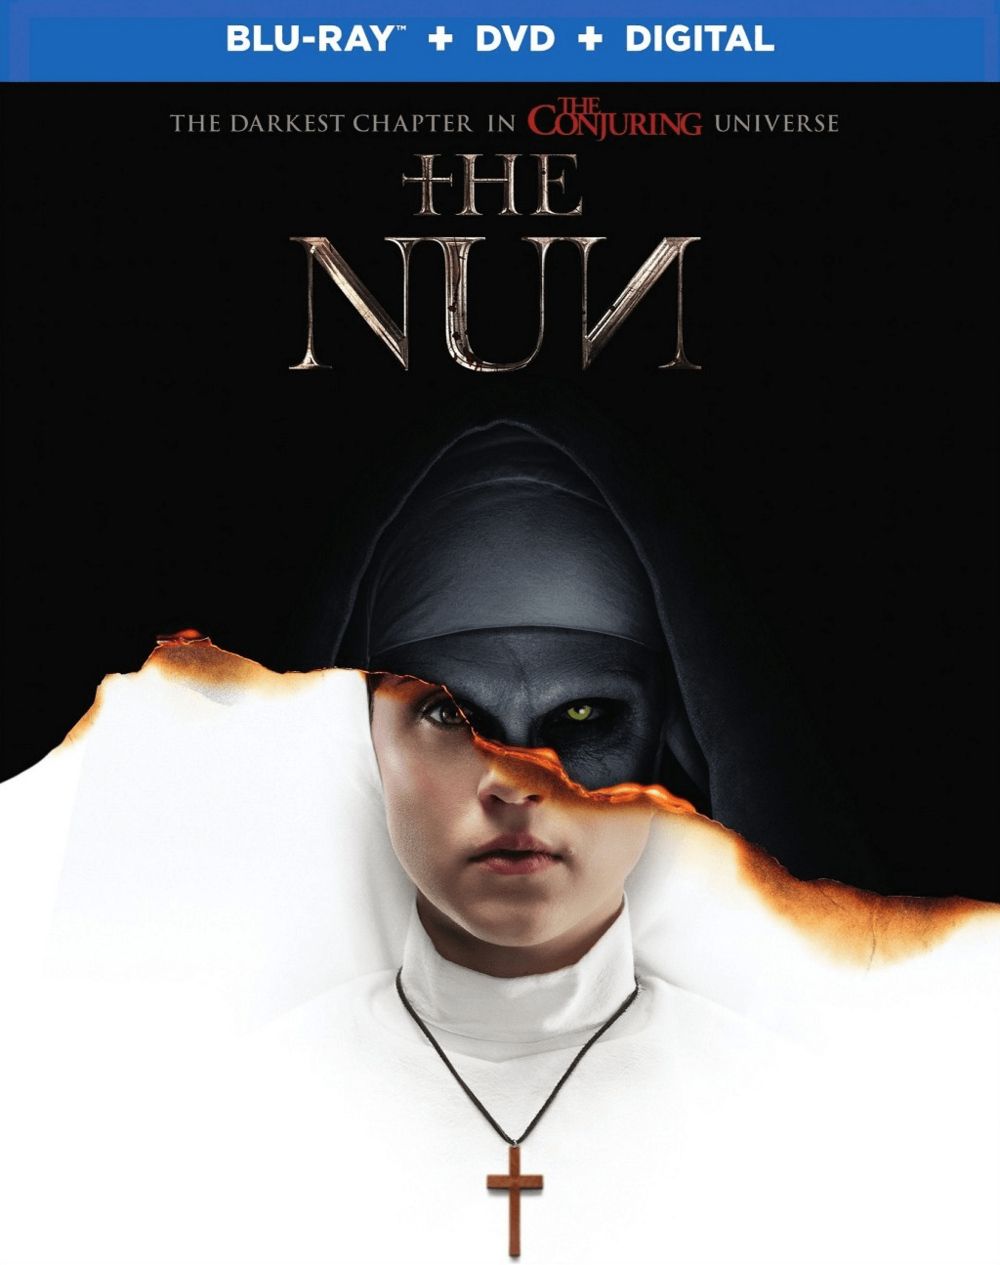 The Nun blu-ray cover art